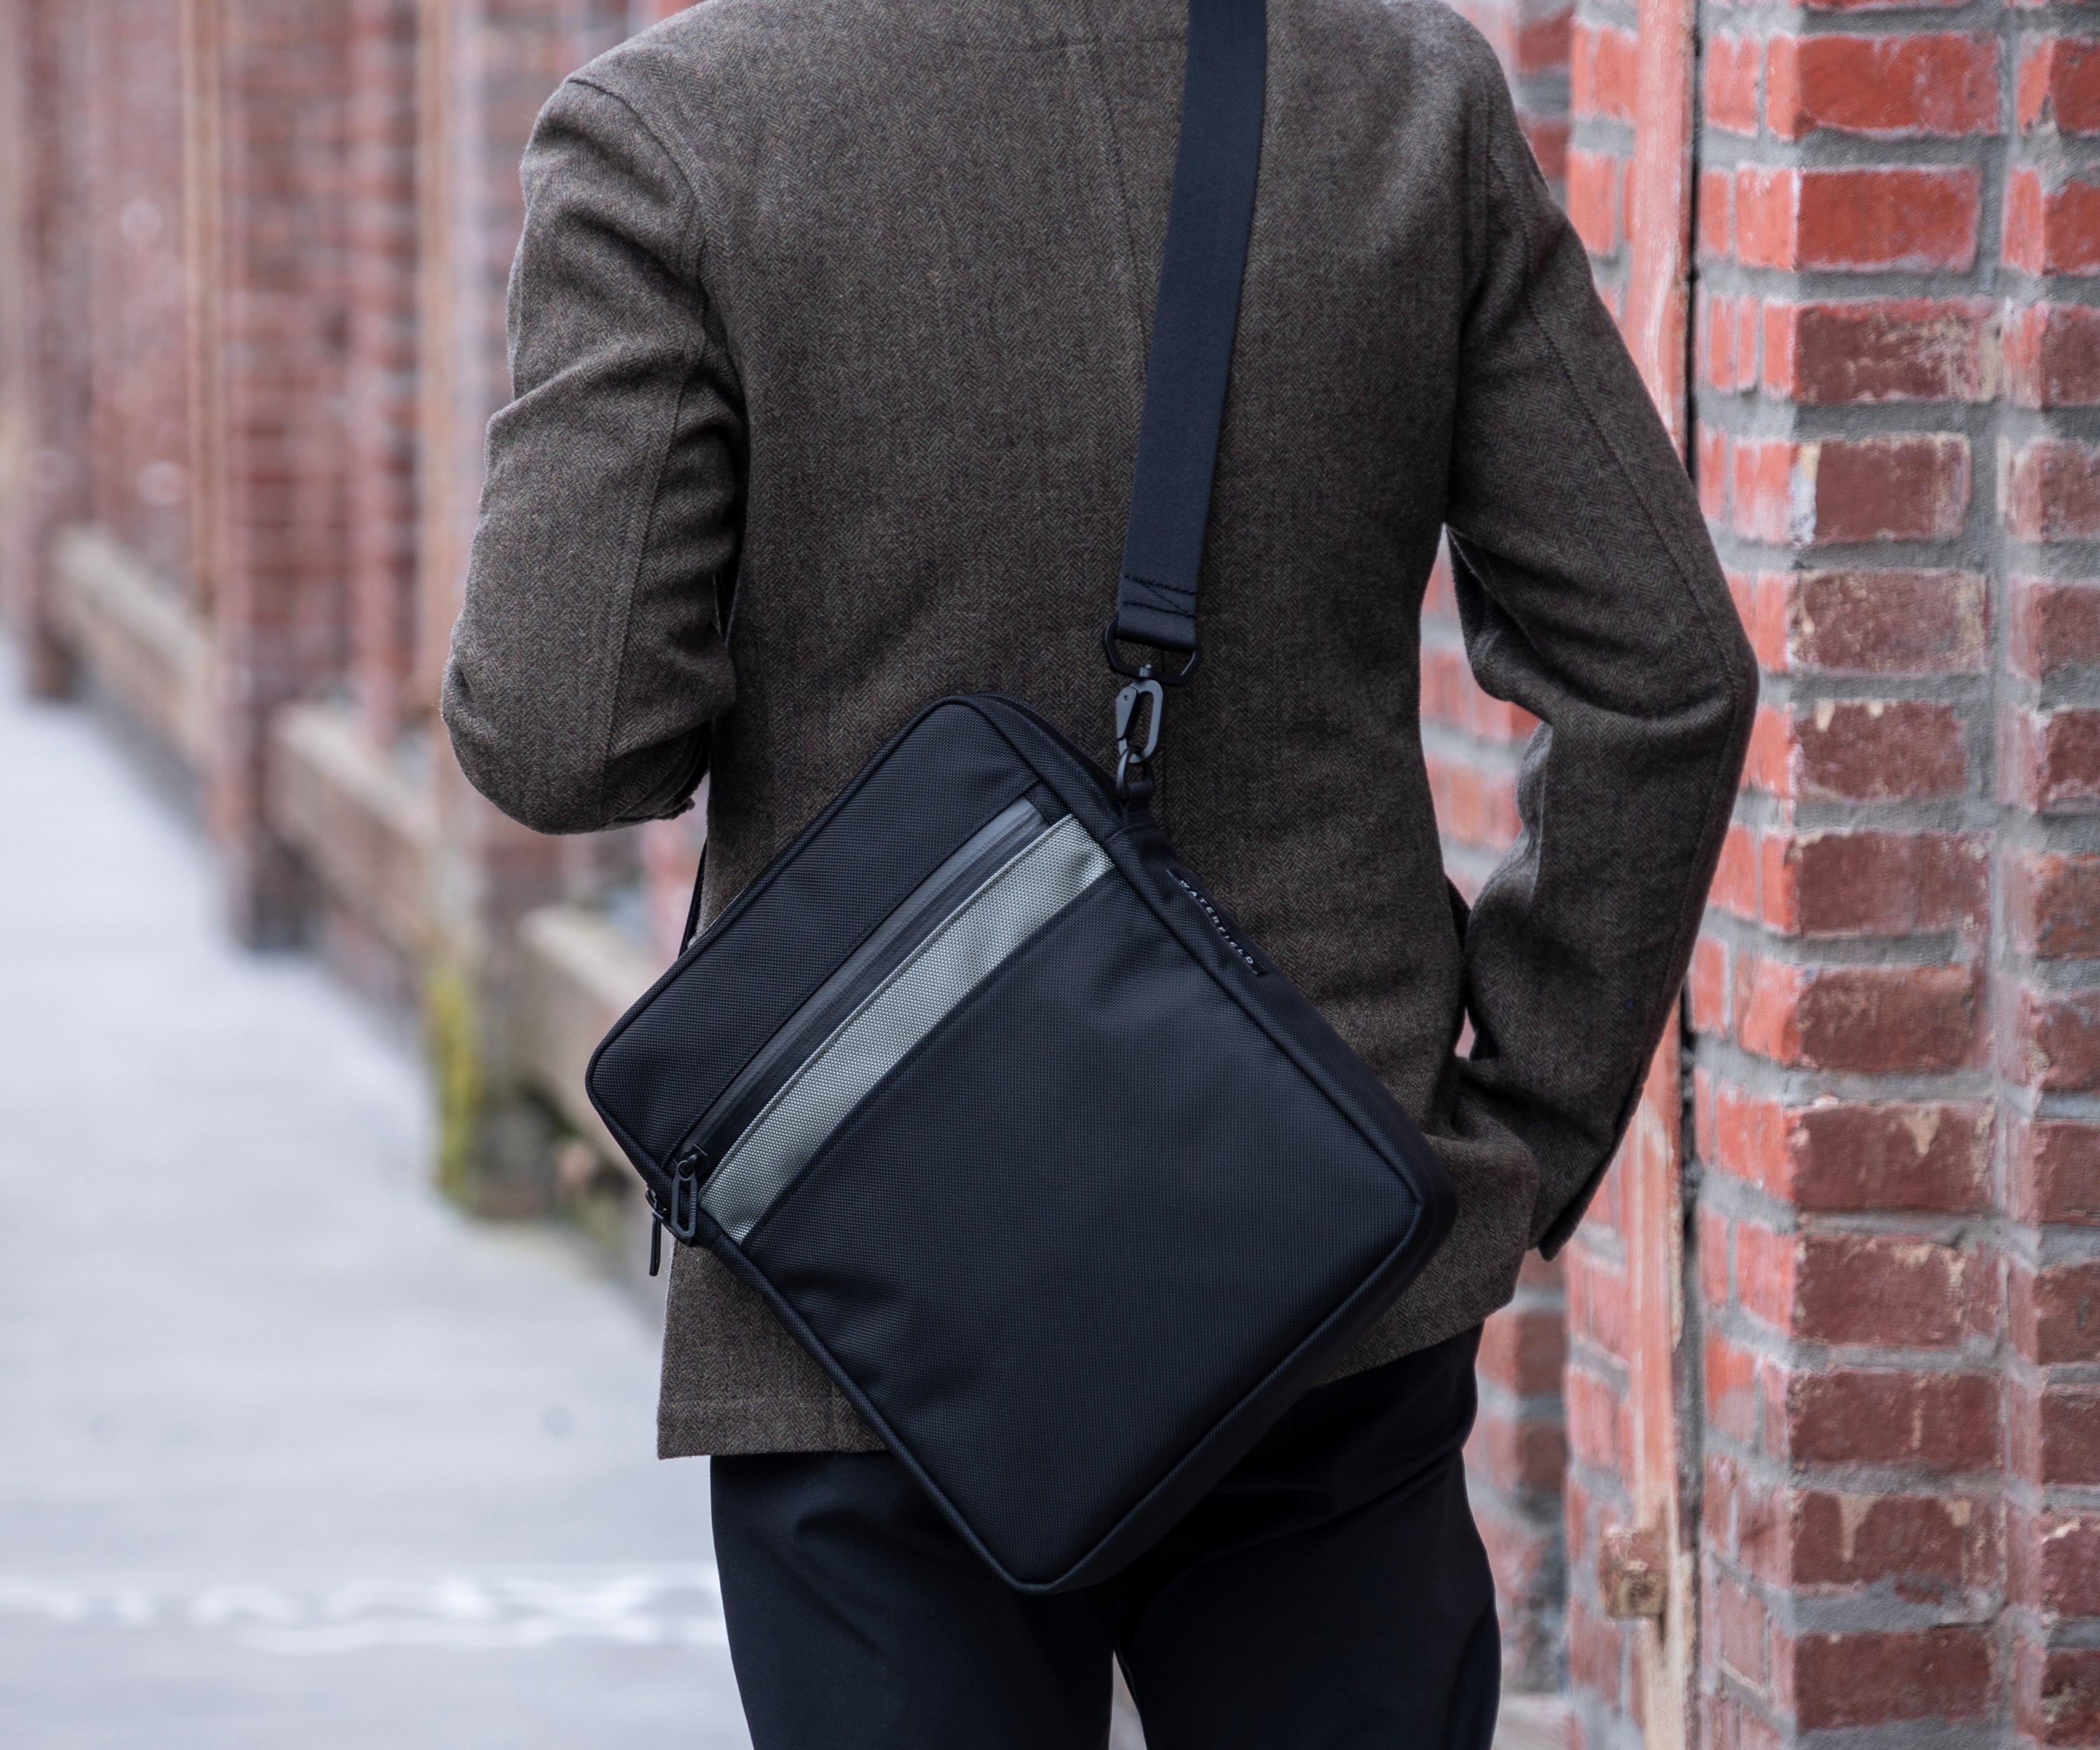 MNODWLOF Small Crossbody Bags for Men Leather Shoulder Bag Messenger Travel  Man Purse Handbag for iPad 9.7